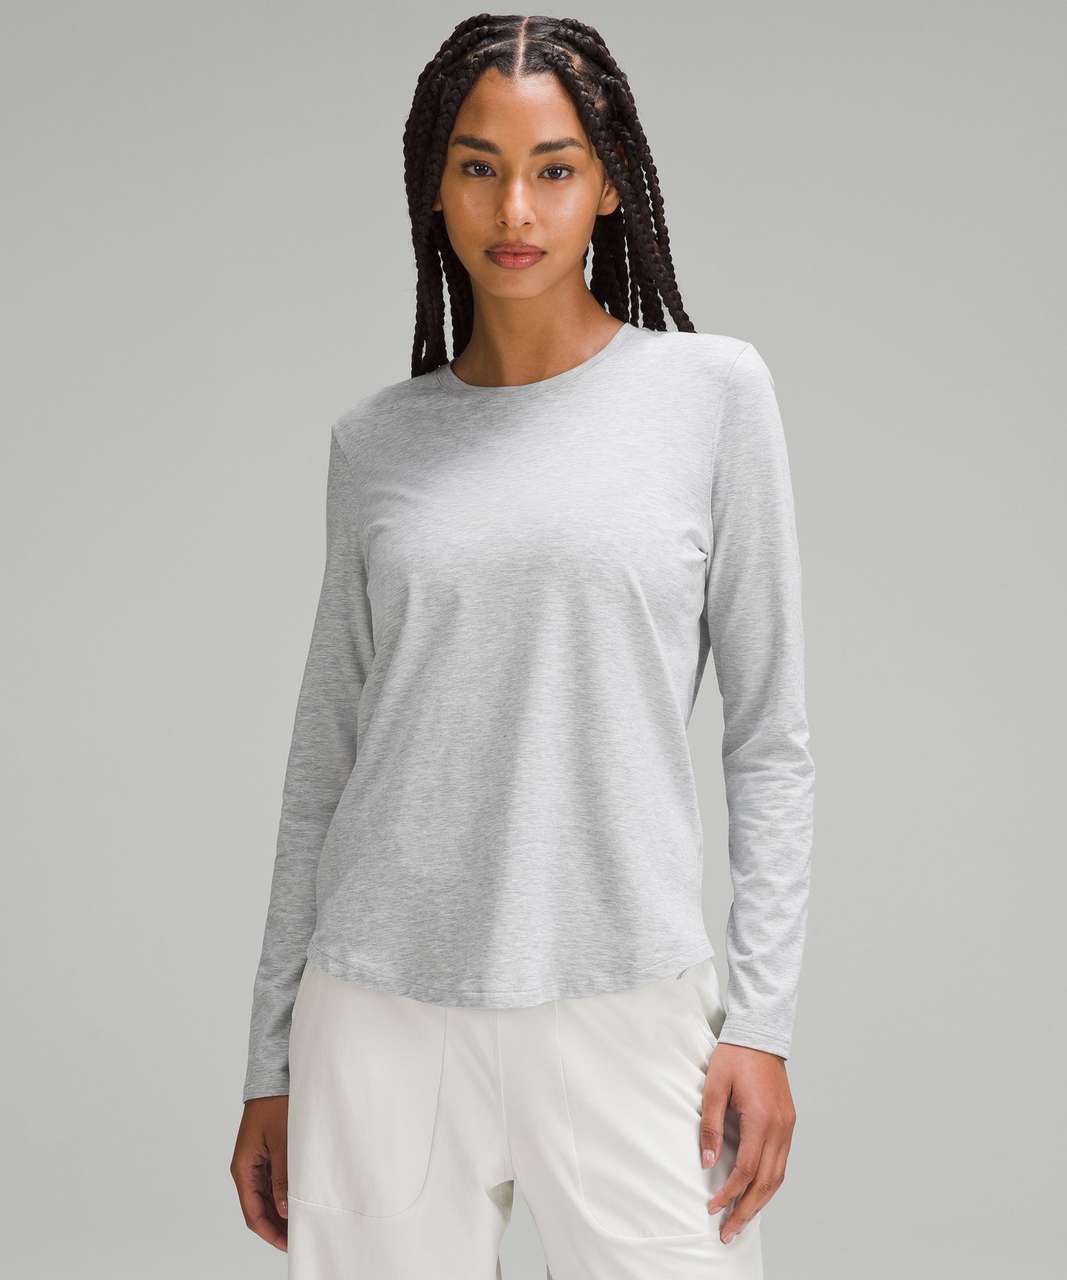 Lululemon Love Long-Sleeve Shirt - Heathered Core Light Grey